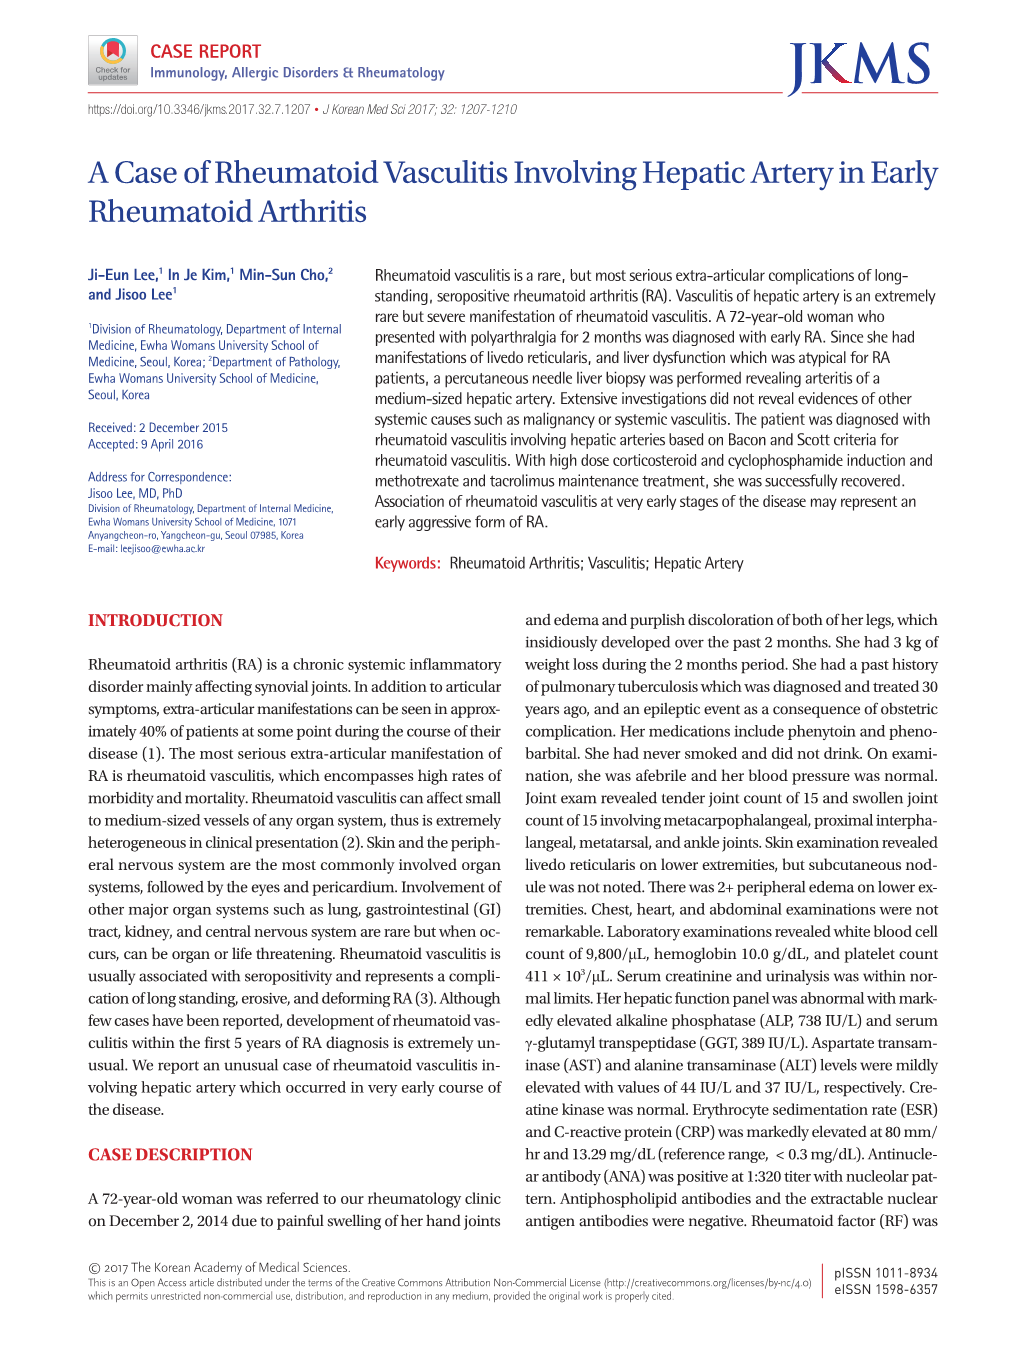 A Case of Rheumatoid Vasculitis Involving Hepatic Artery in Early Rheumatoid Arthritis